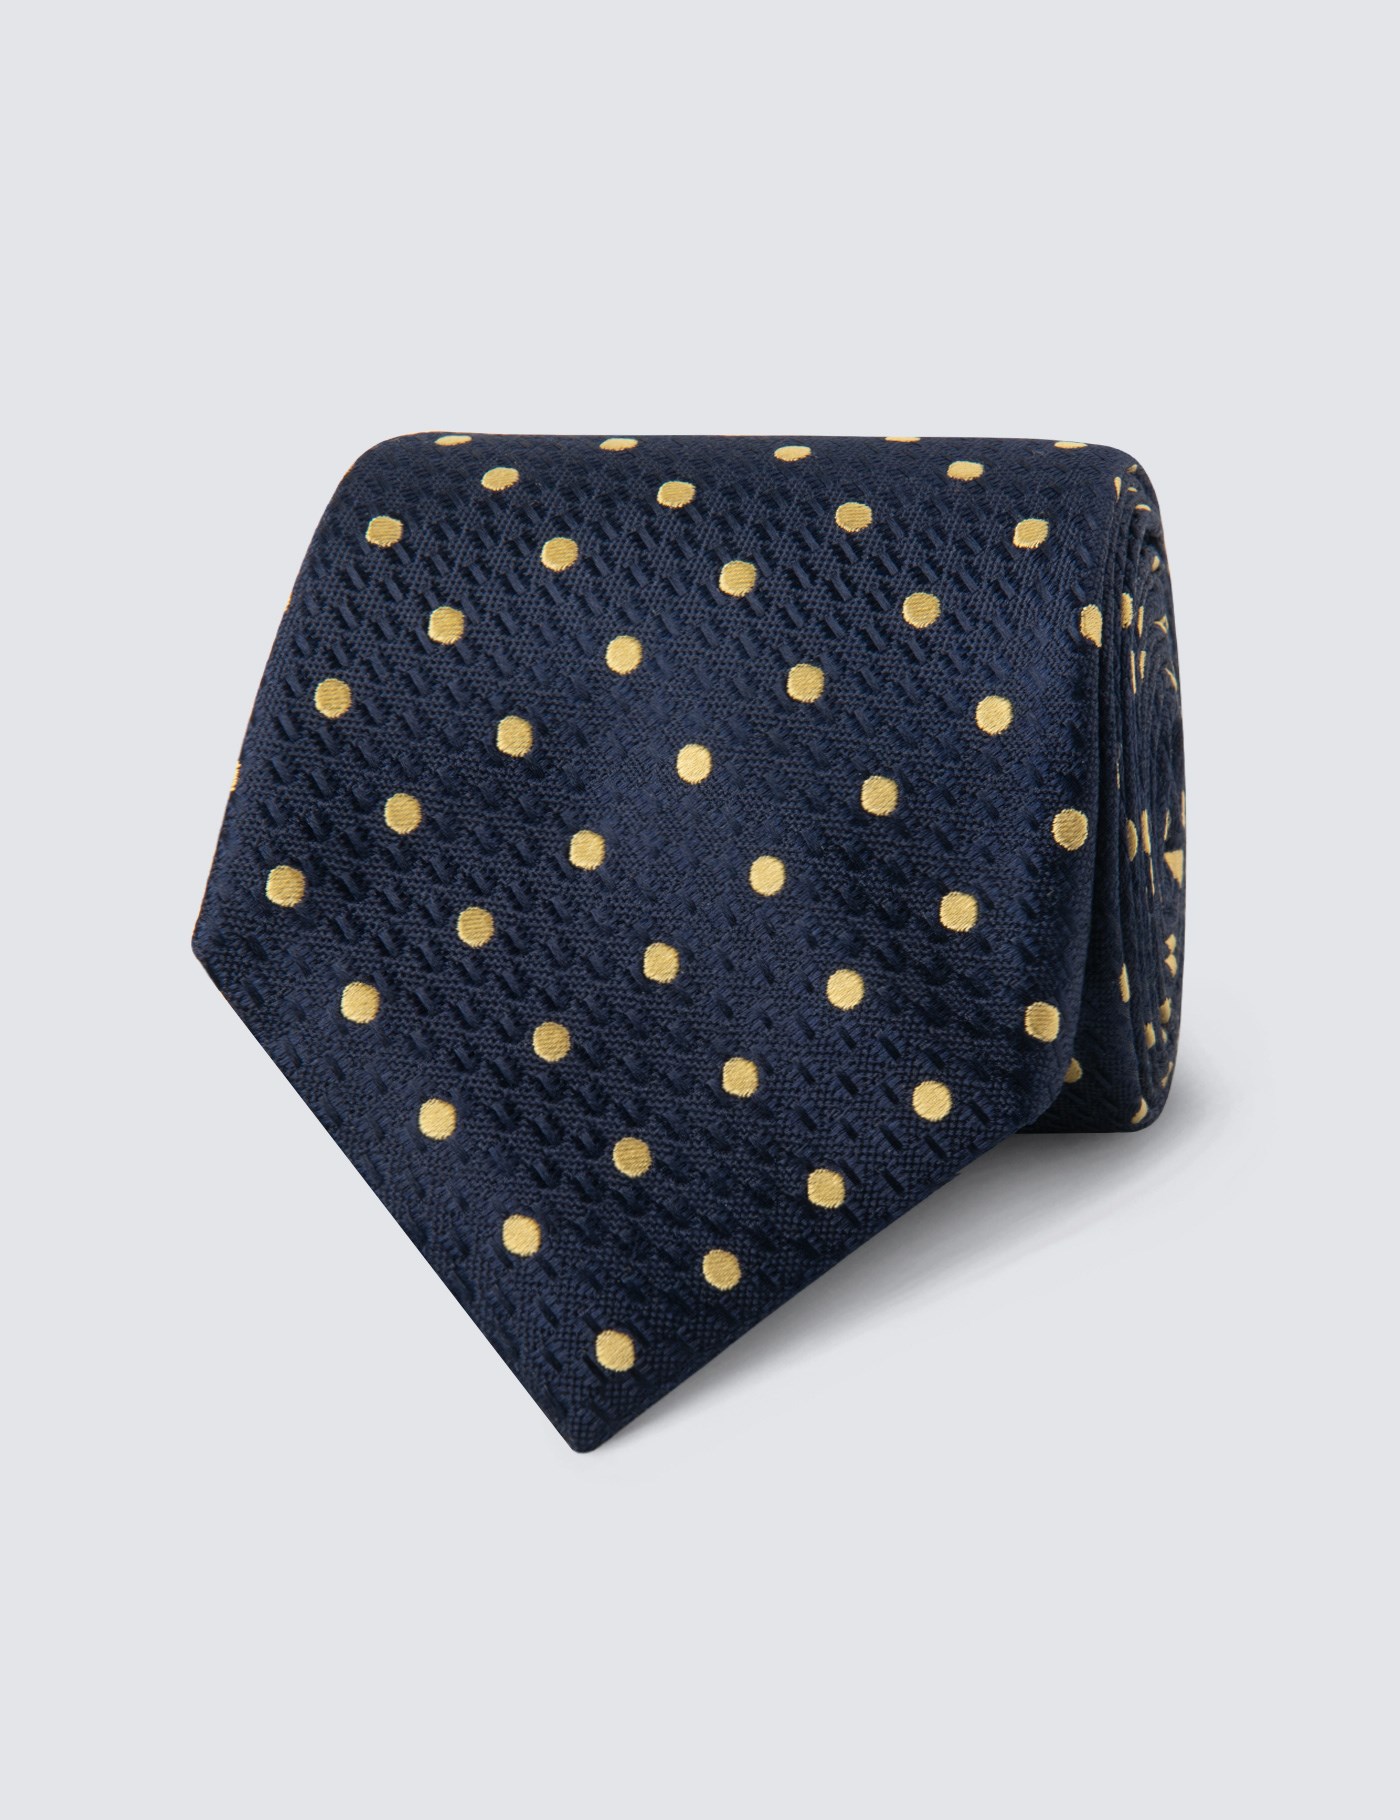 hawes & curtis men's navy & yellow even spot tie - 100% silk